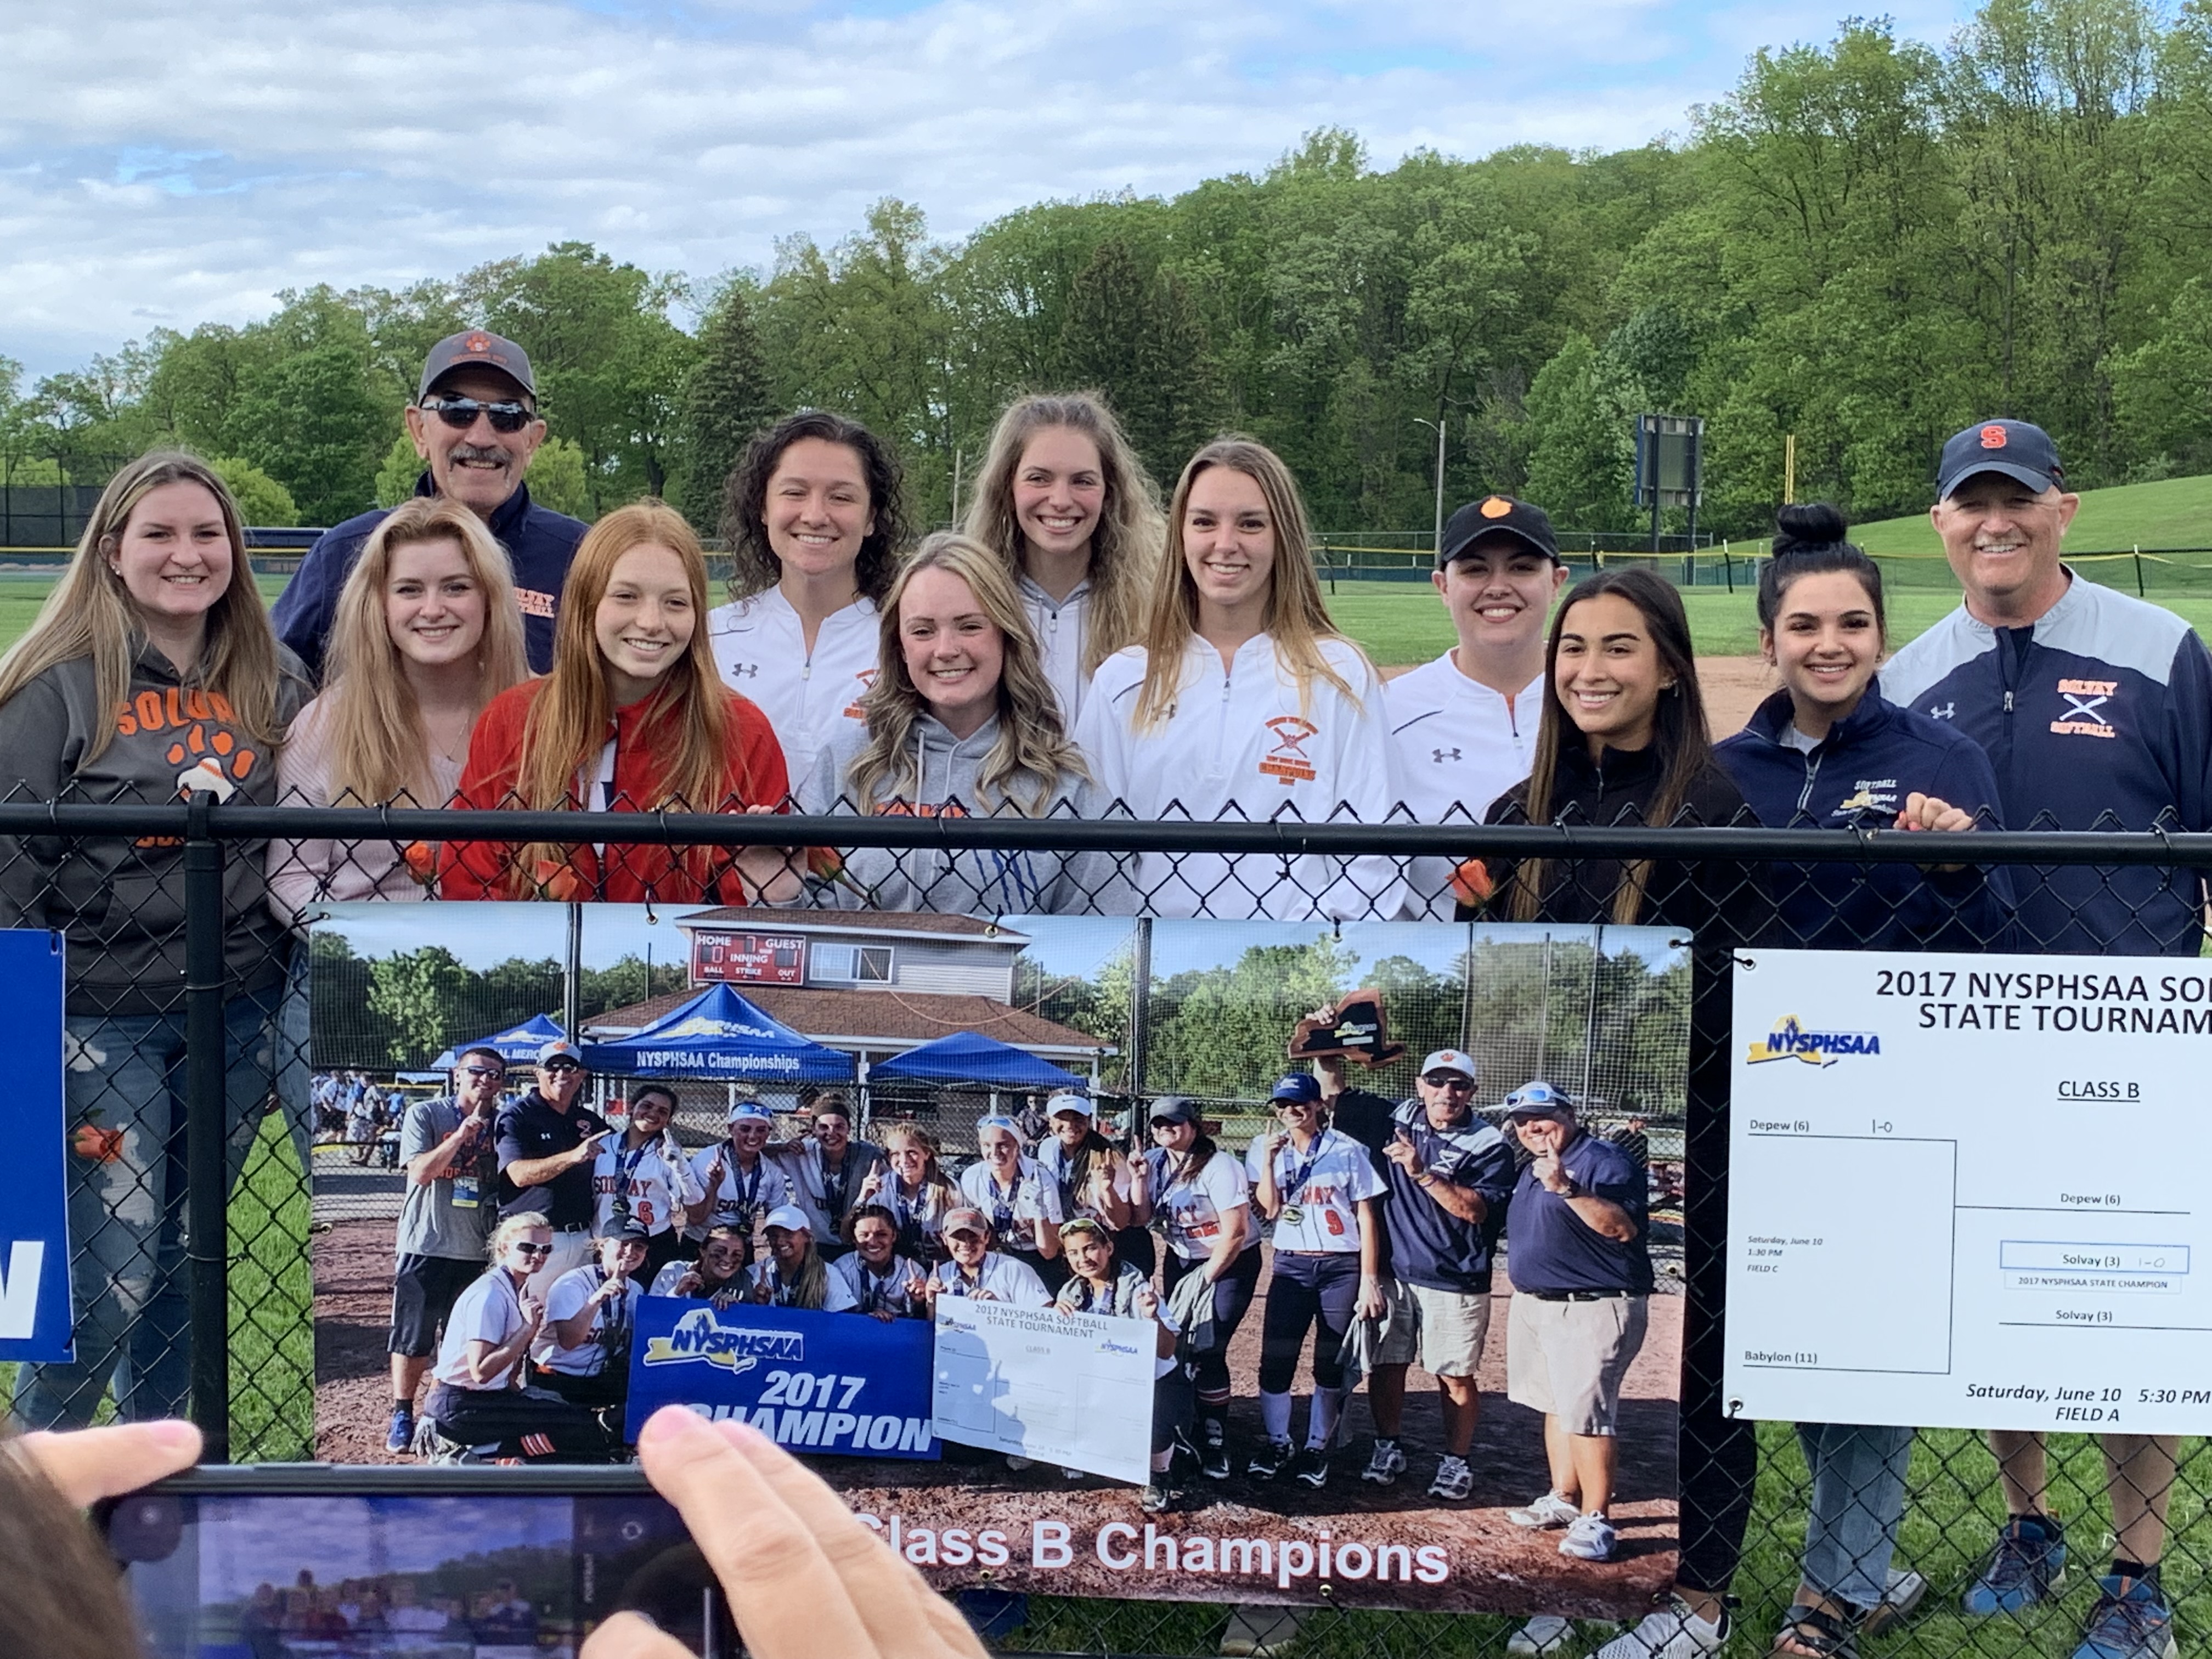 2017 NYSPHSAA Team Reunion, posed near signs